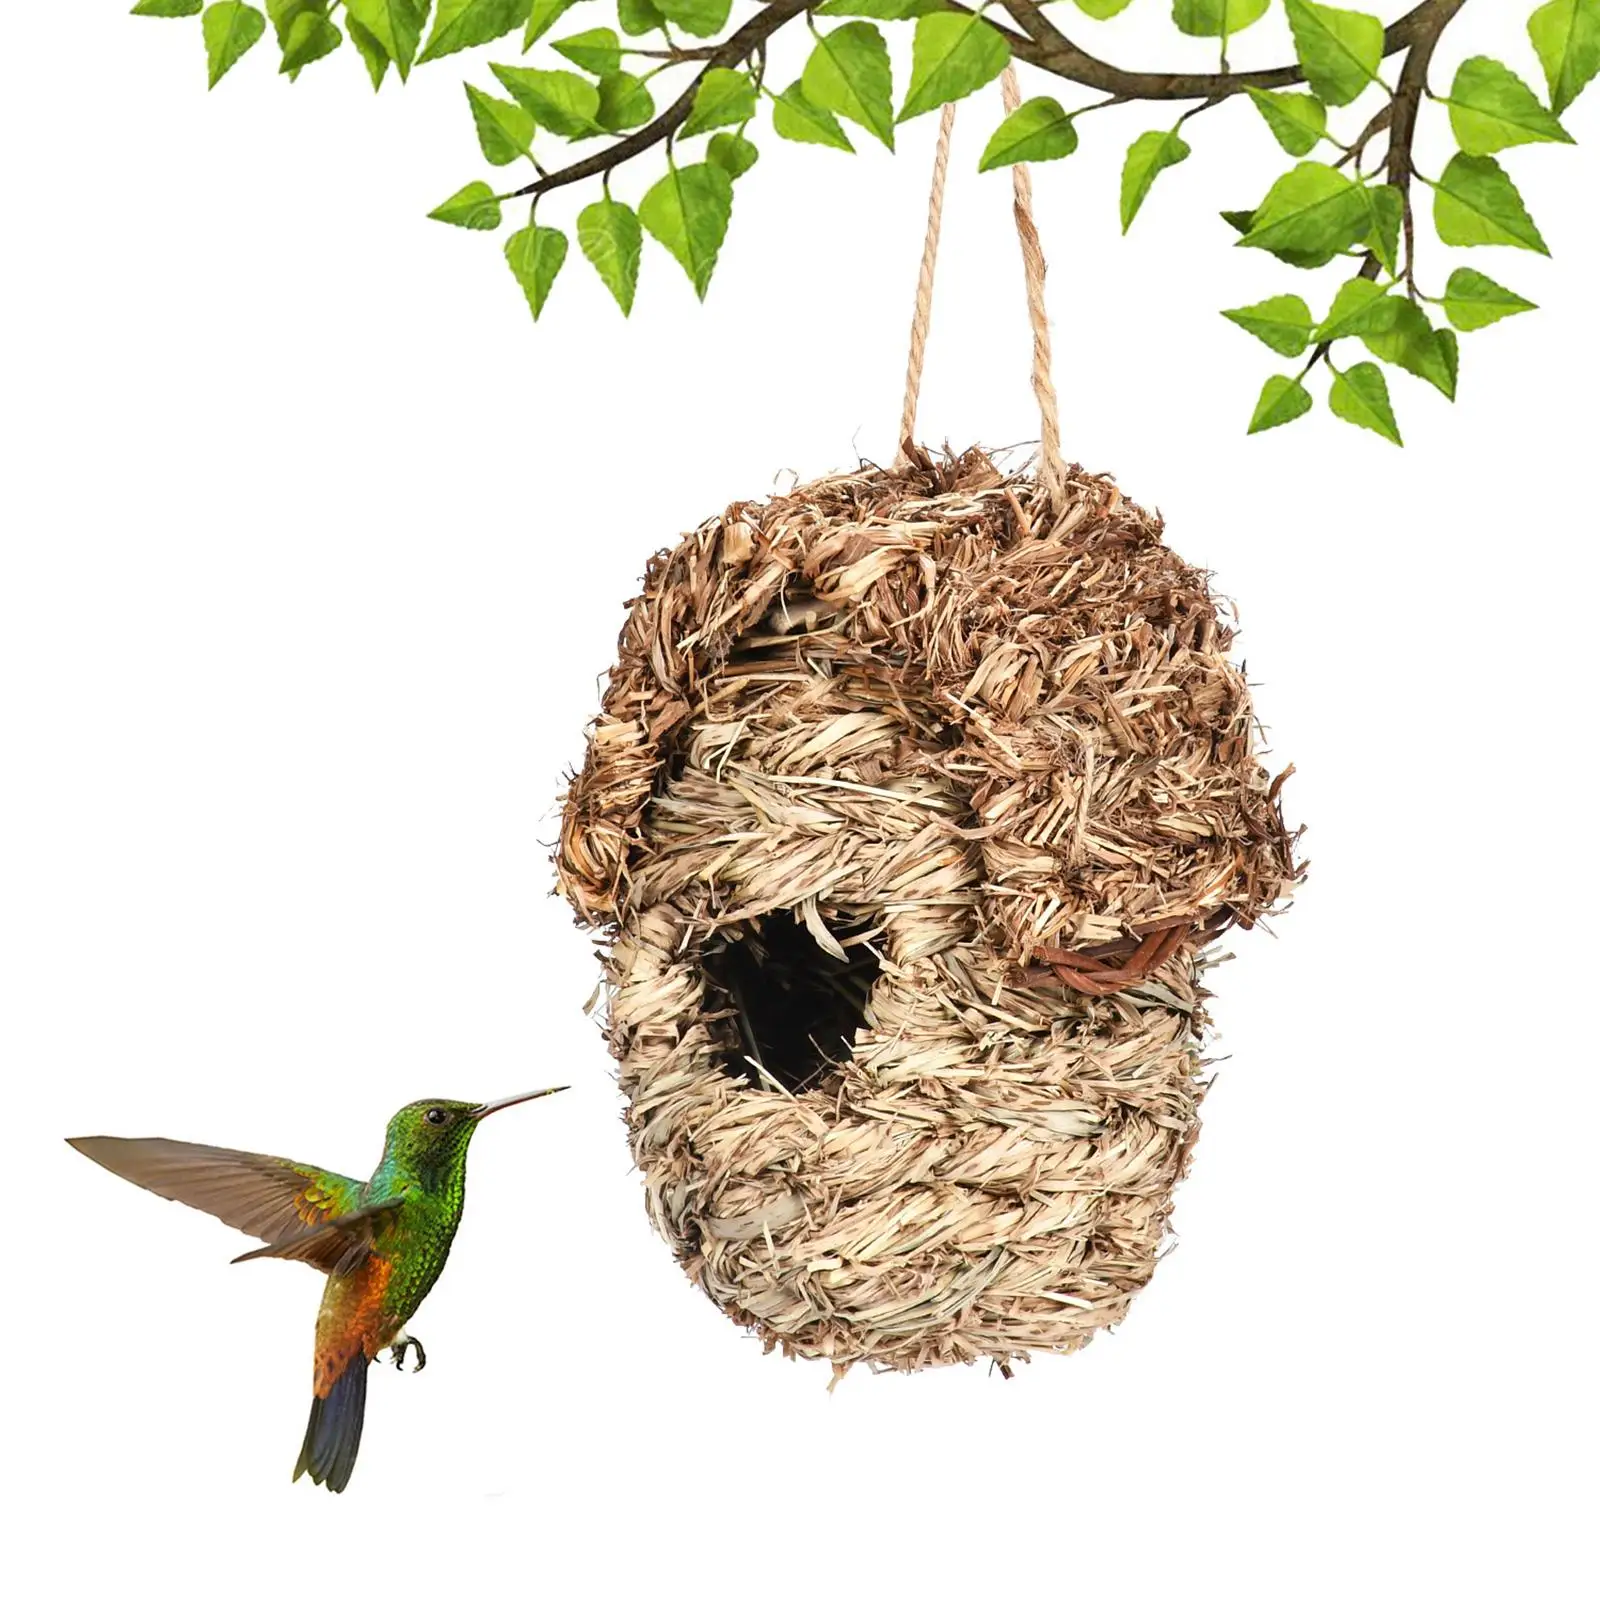 Straw Hand Woven Bird Cage Bird Nest Hut Shelter Hanging Parrot Nest House Birdhouse for Outdoor Outside Lawn Garden